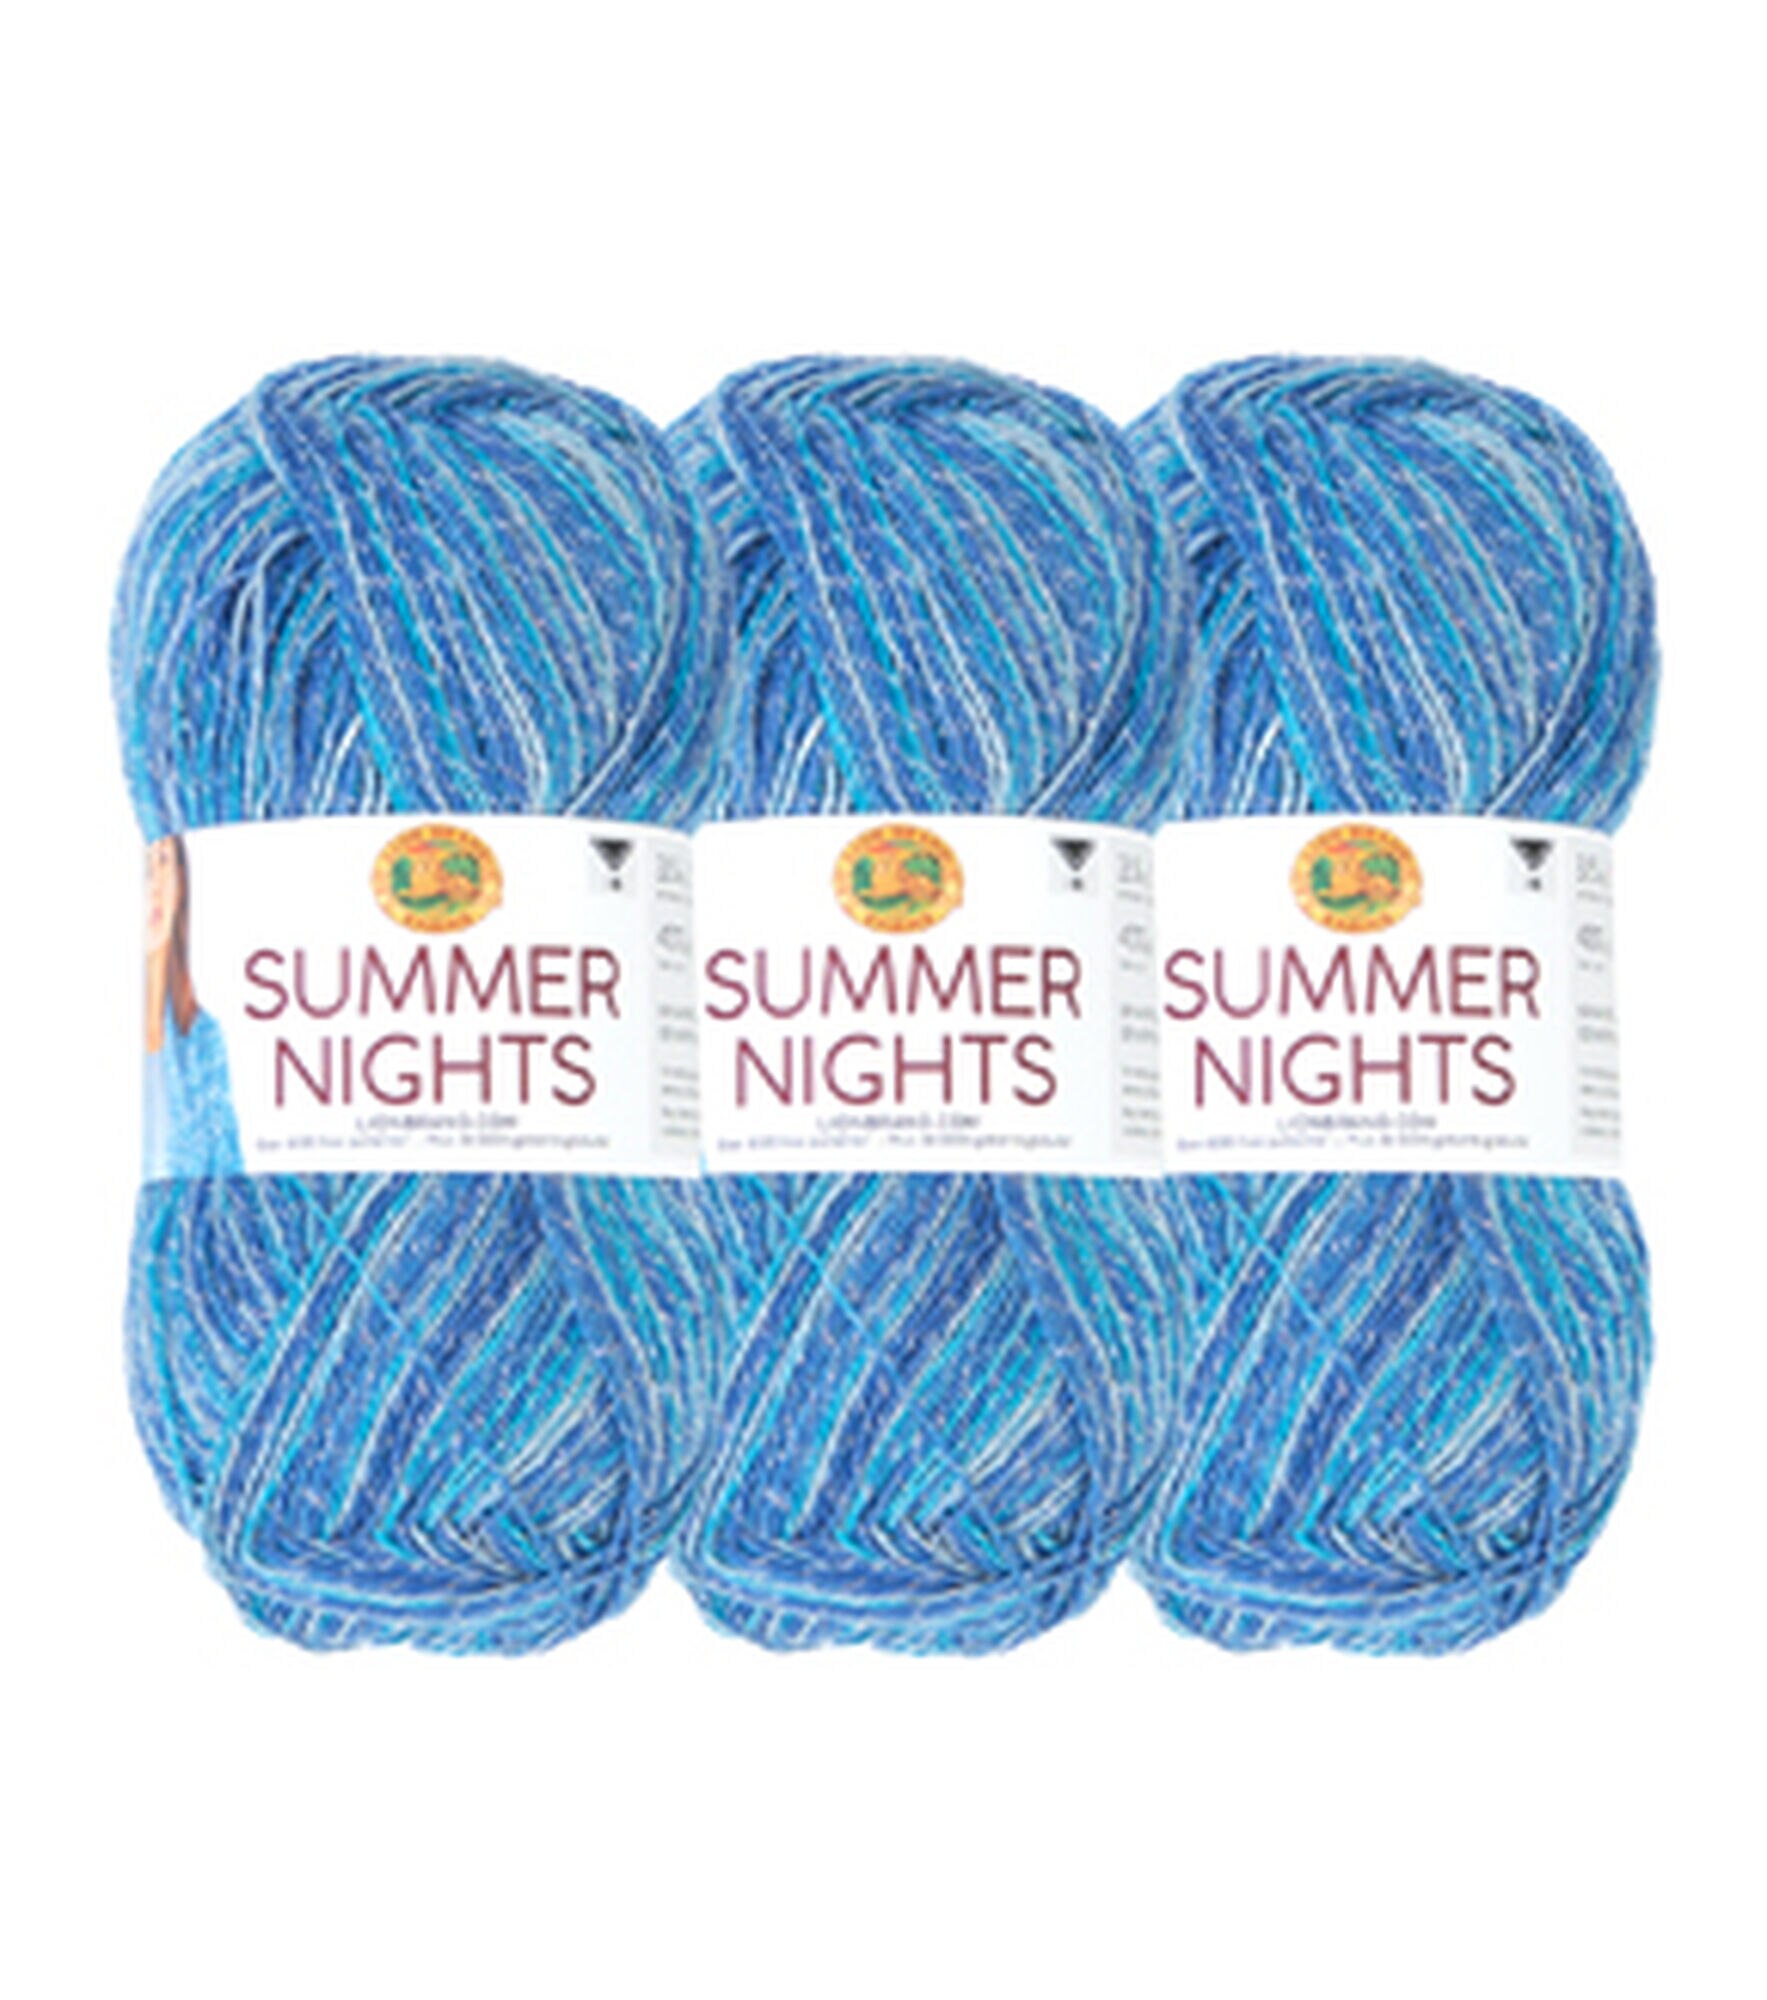 Schitt's Creek Yarn – Lion Brand Yarn, Blue Yarn 